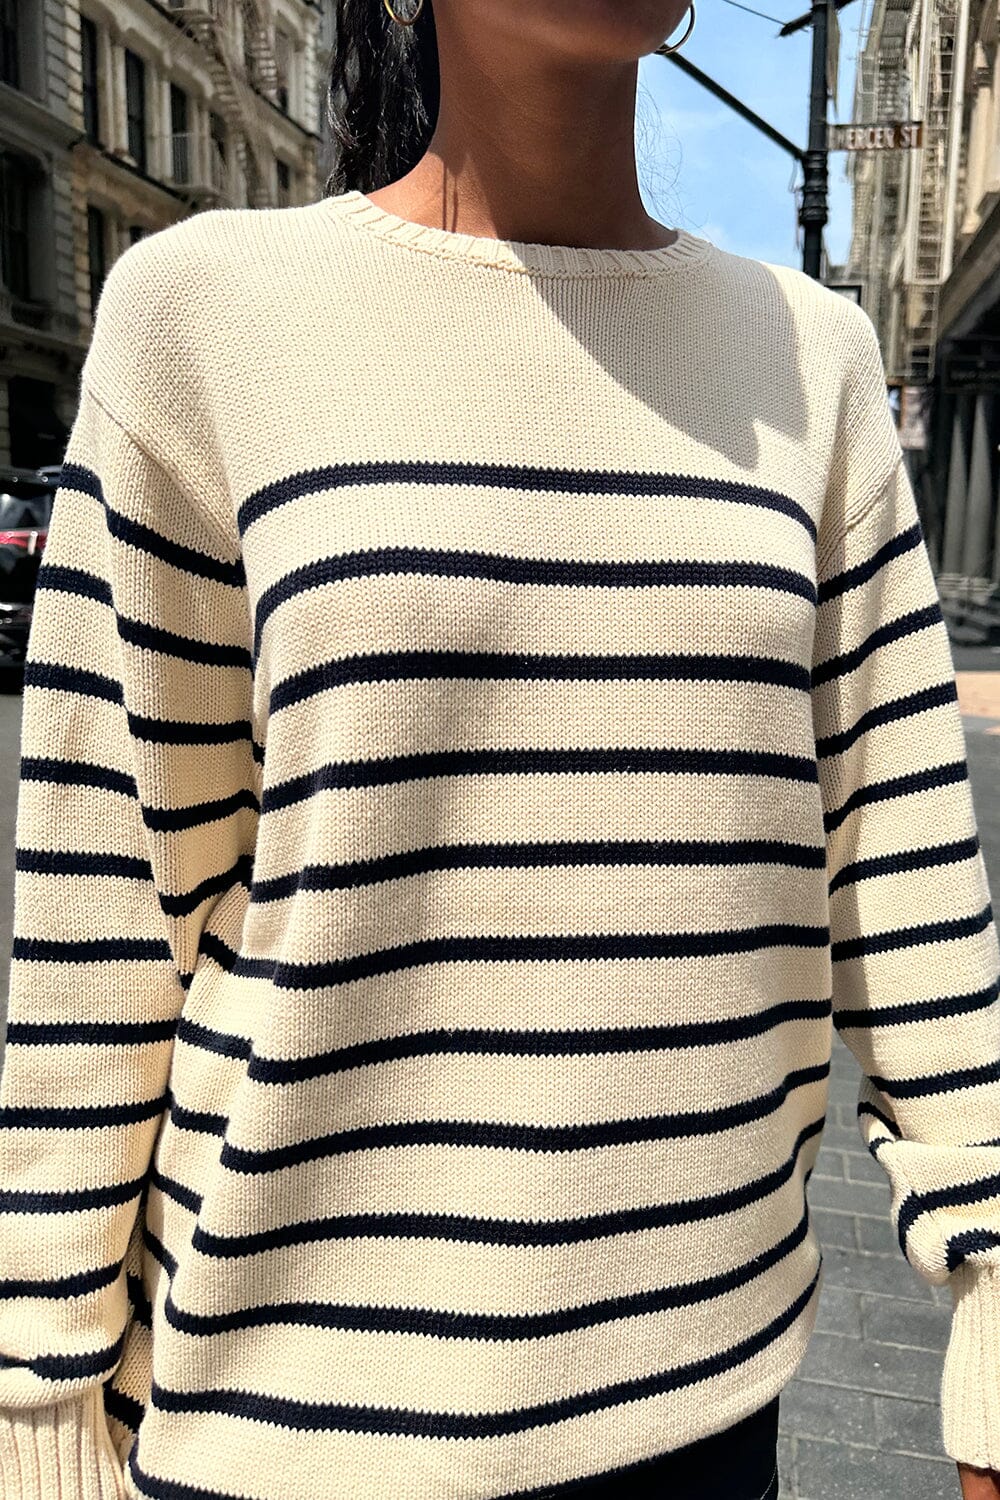  Brandy Melville Striped Sweater